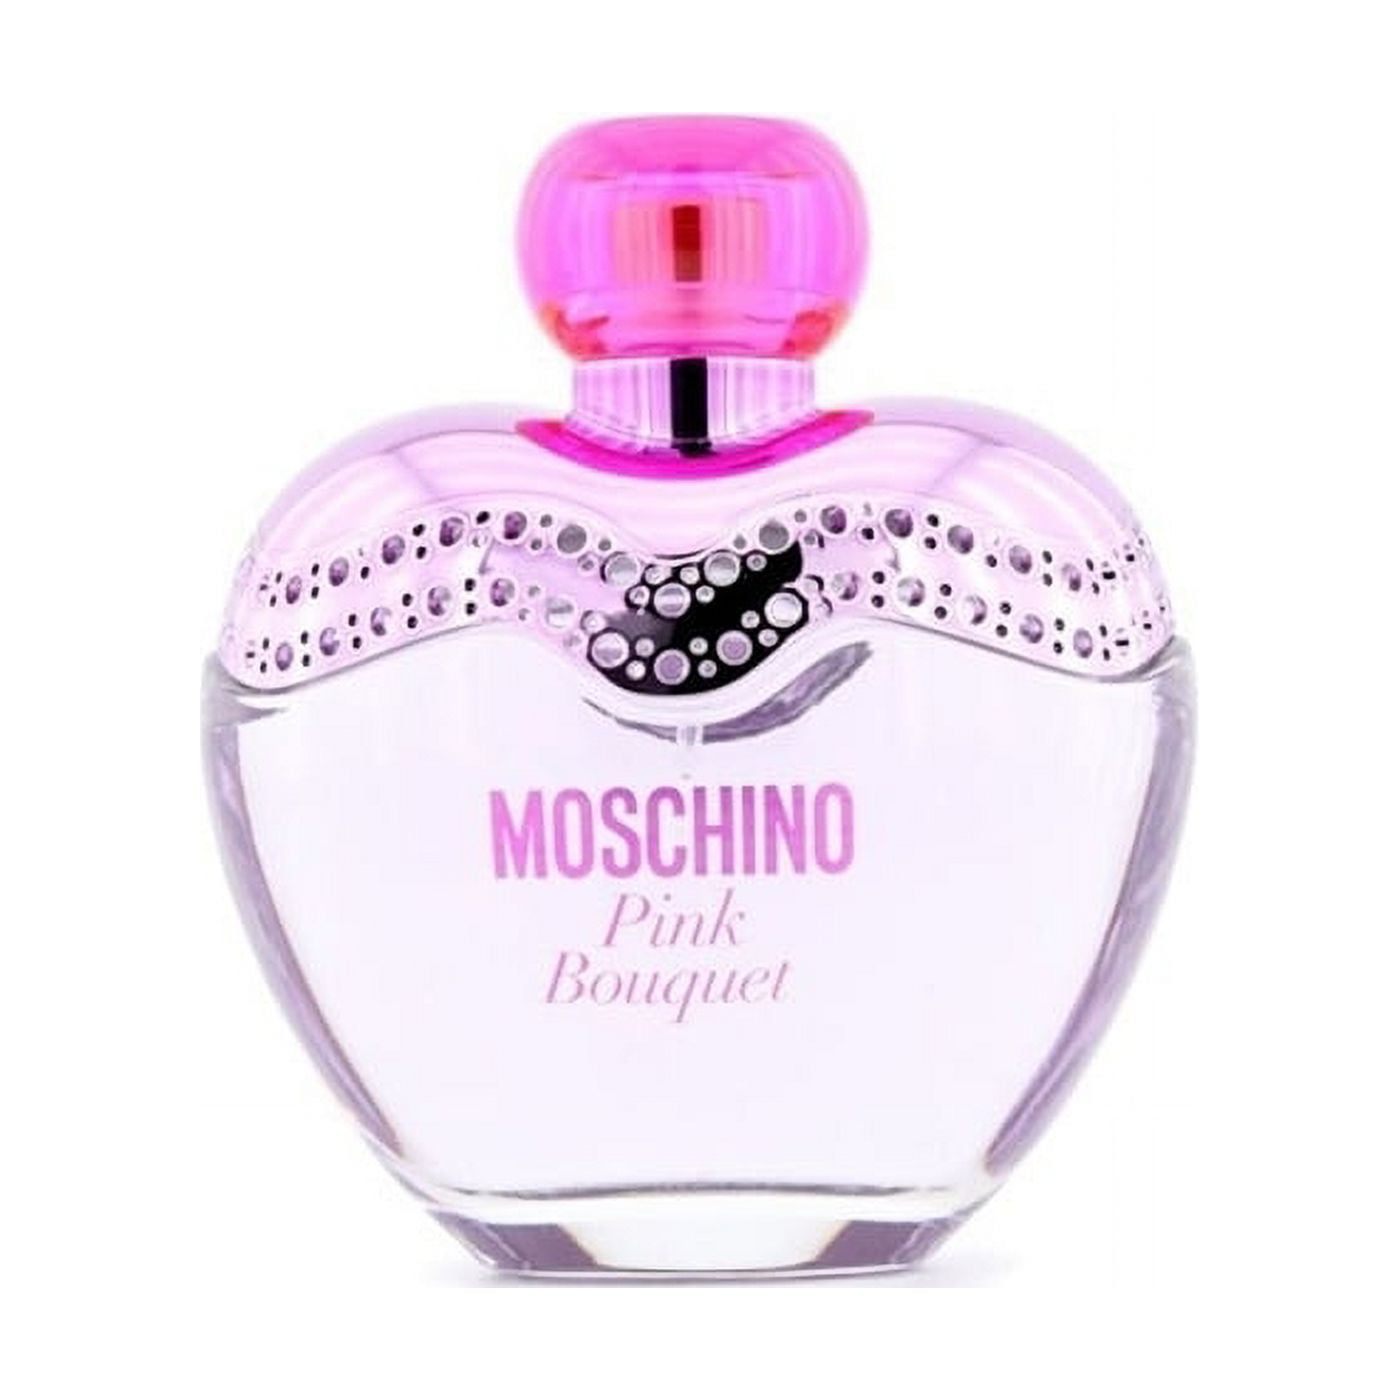 Moschino Pink Bouquet Eau De Toilette Spray 100ml/3.4oz 